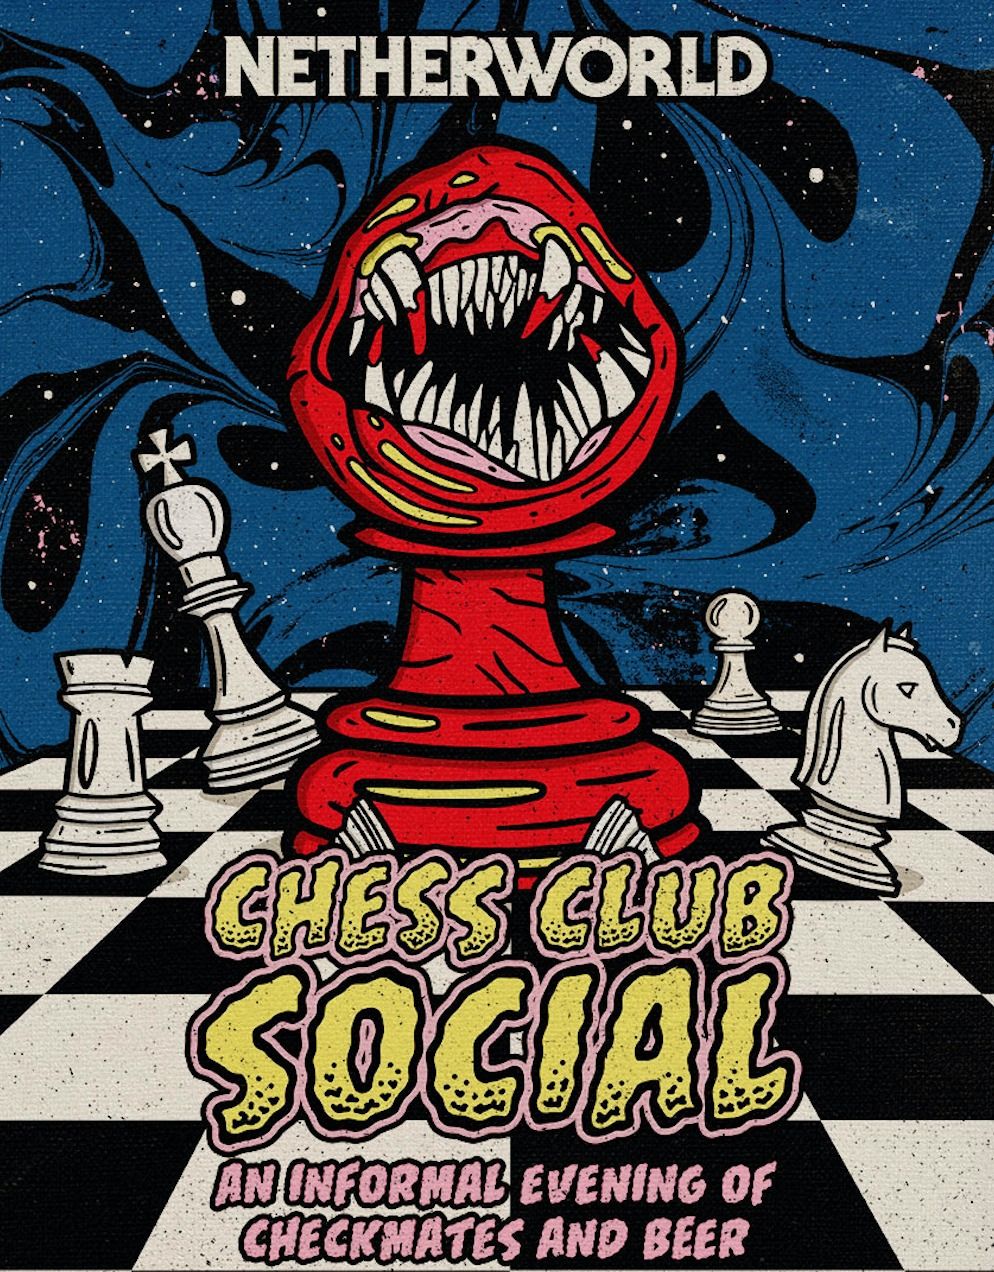 Netherworld Chess Club Social